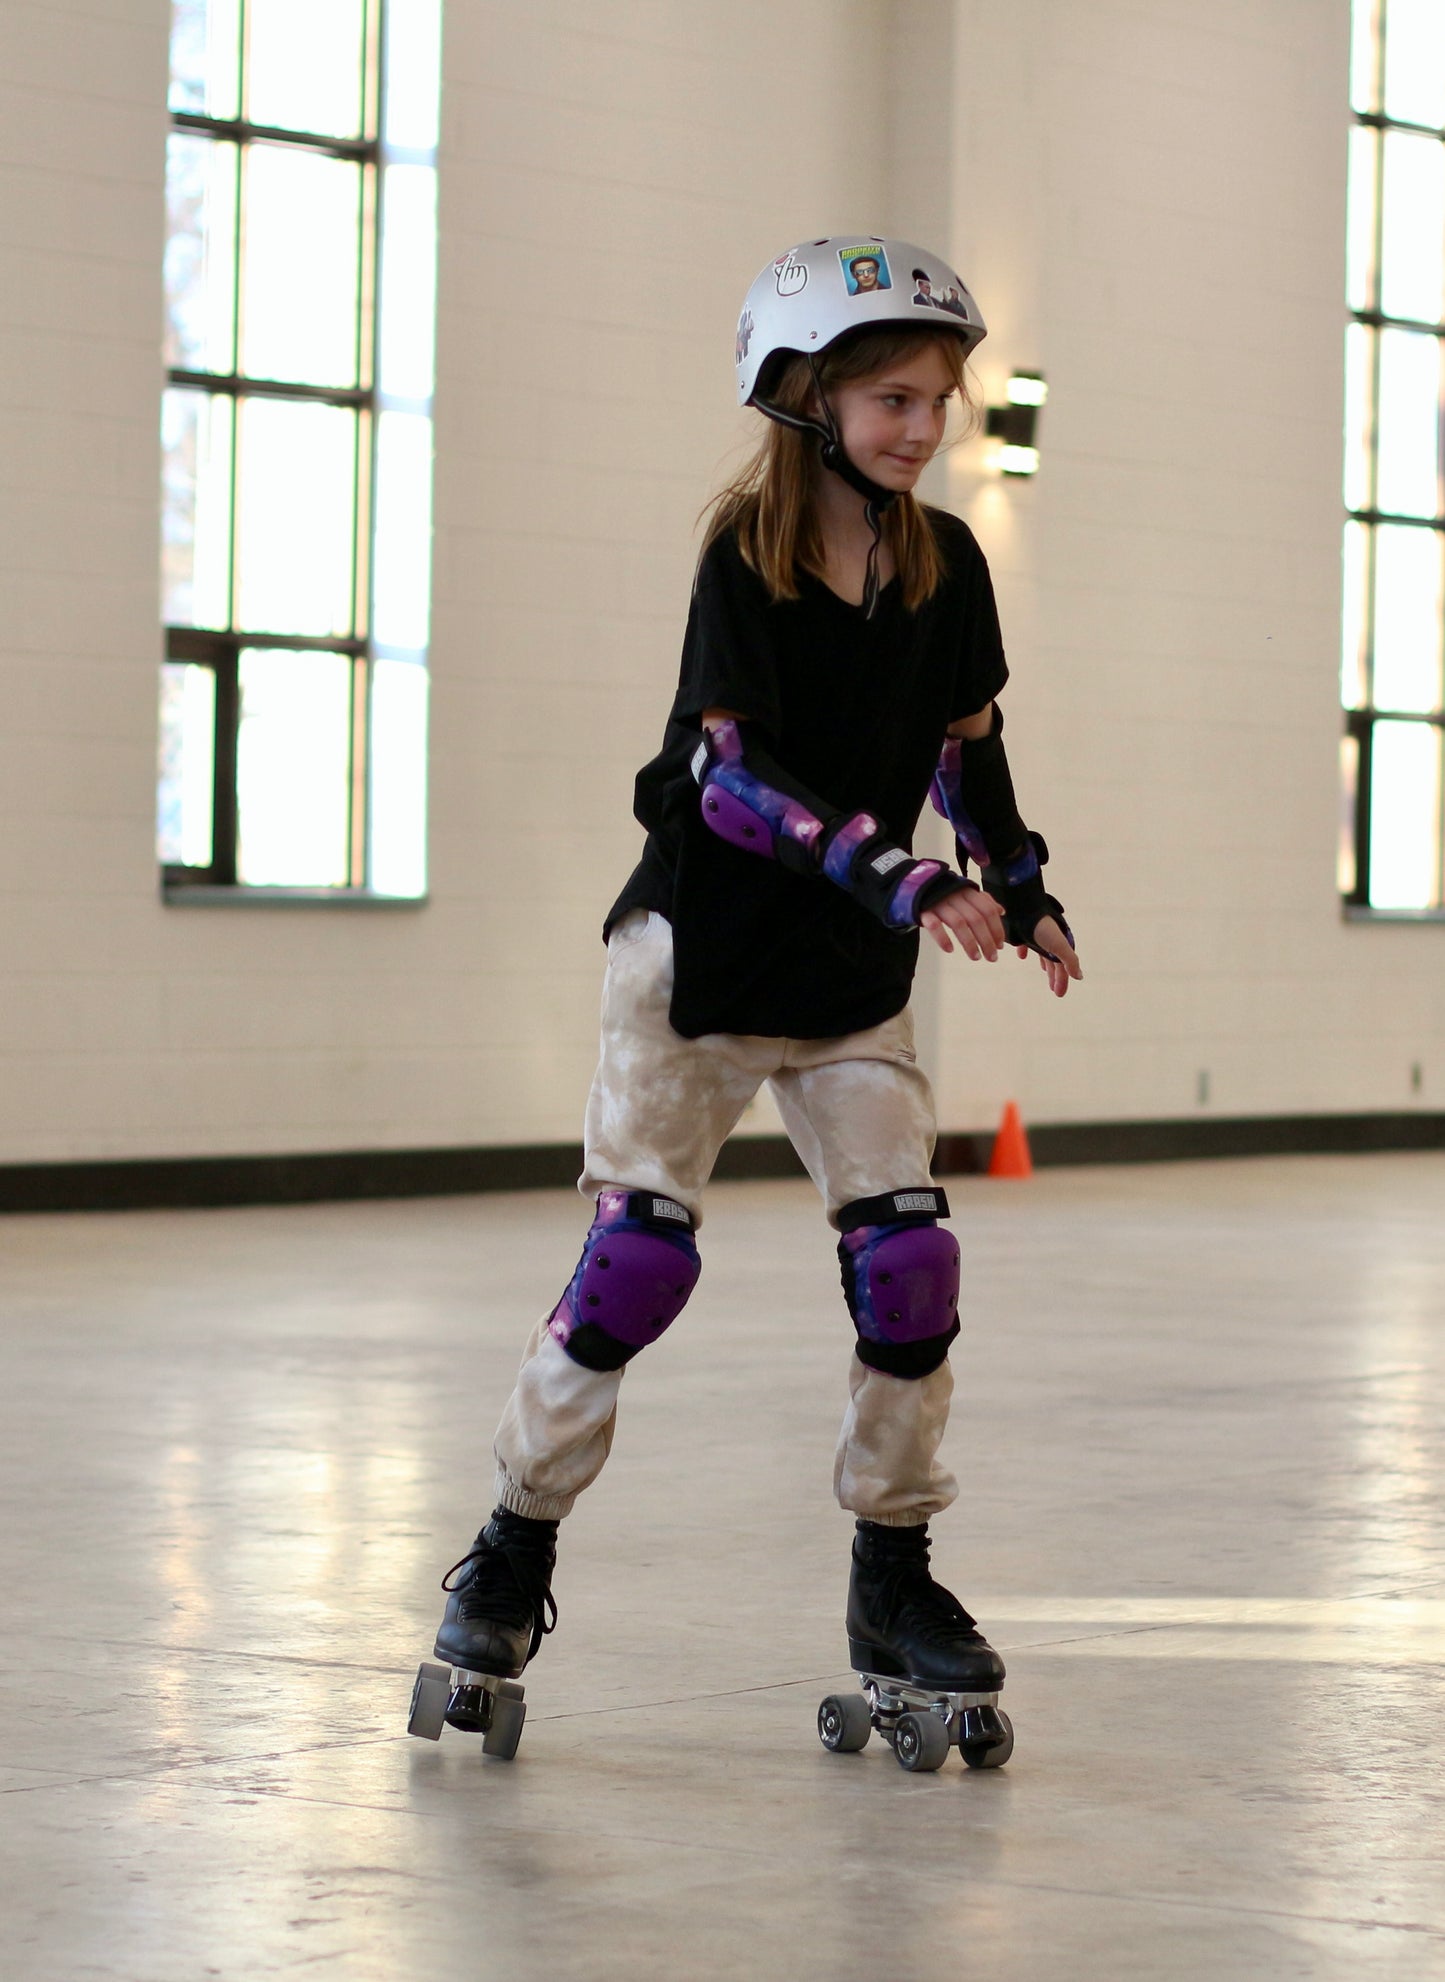 Kids Learn to Skate